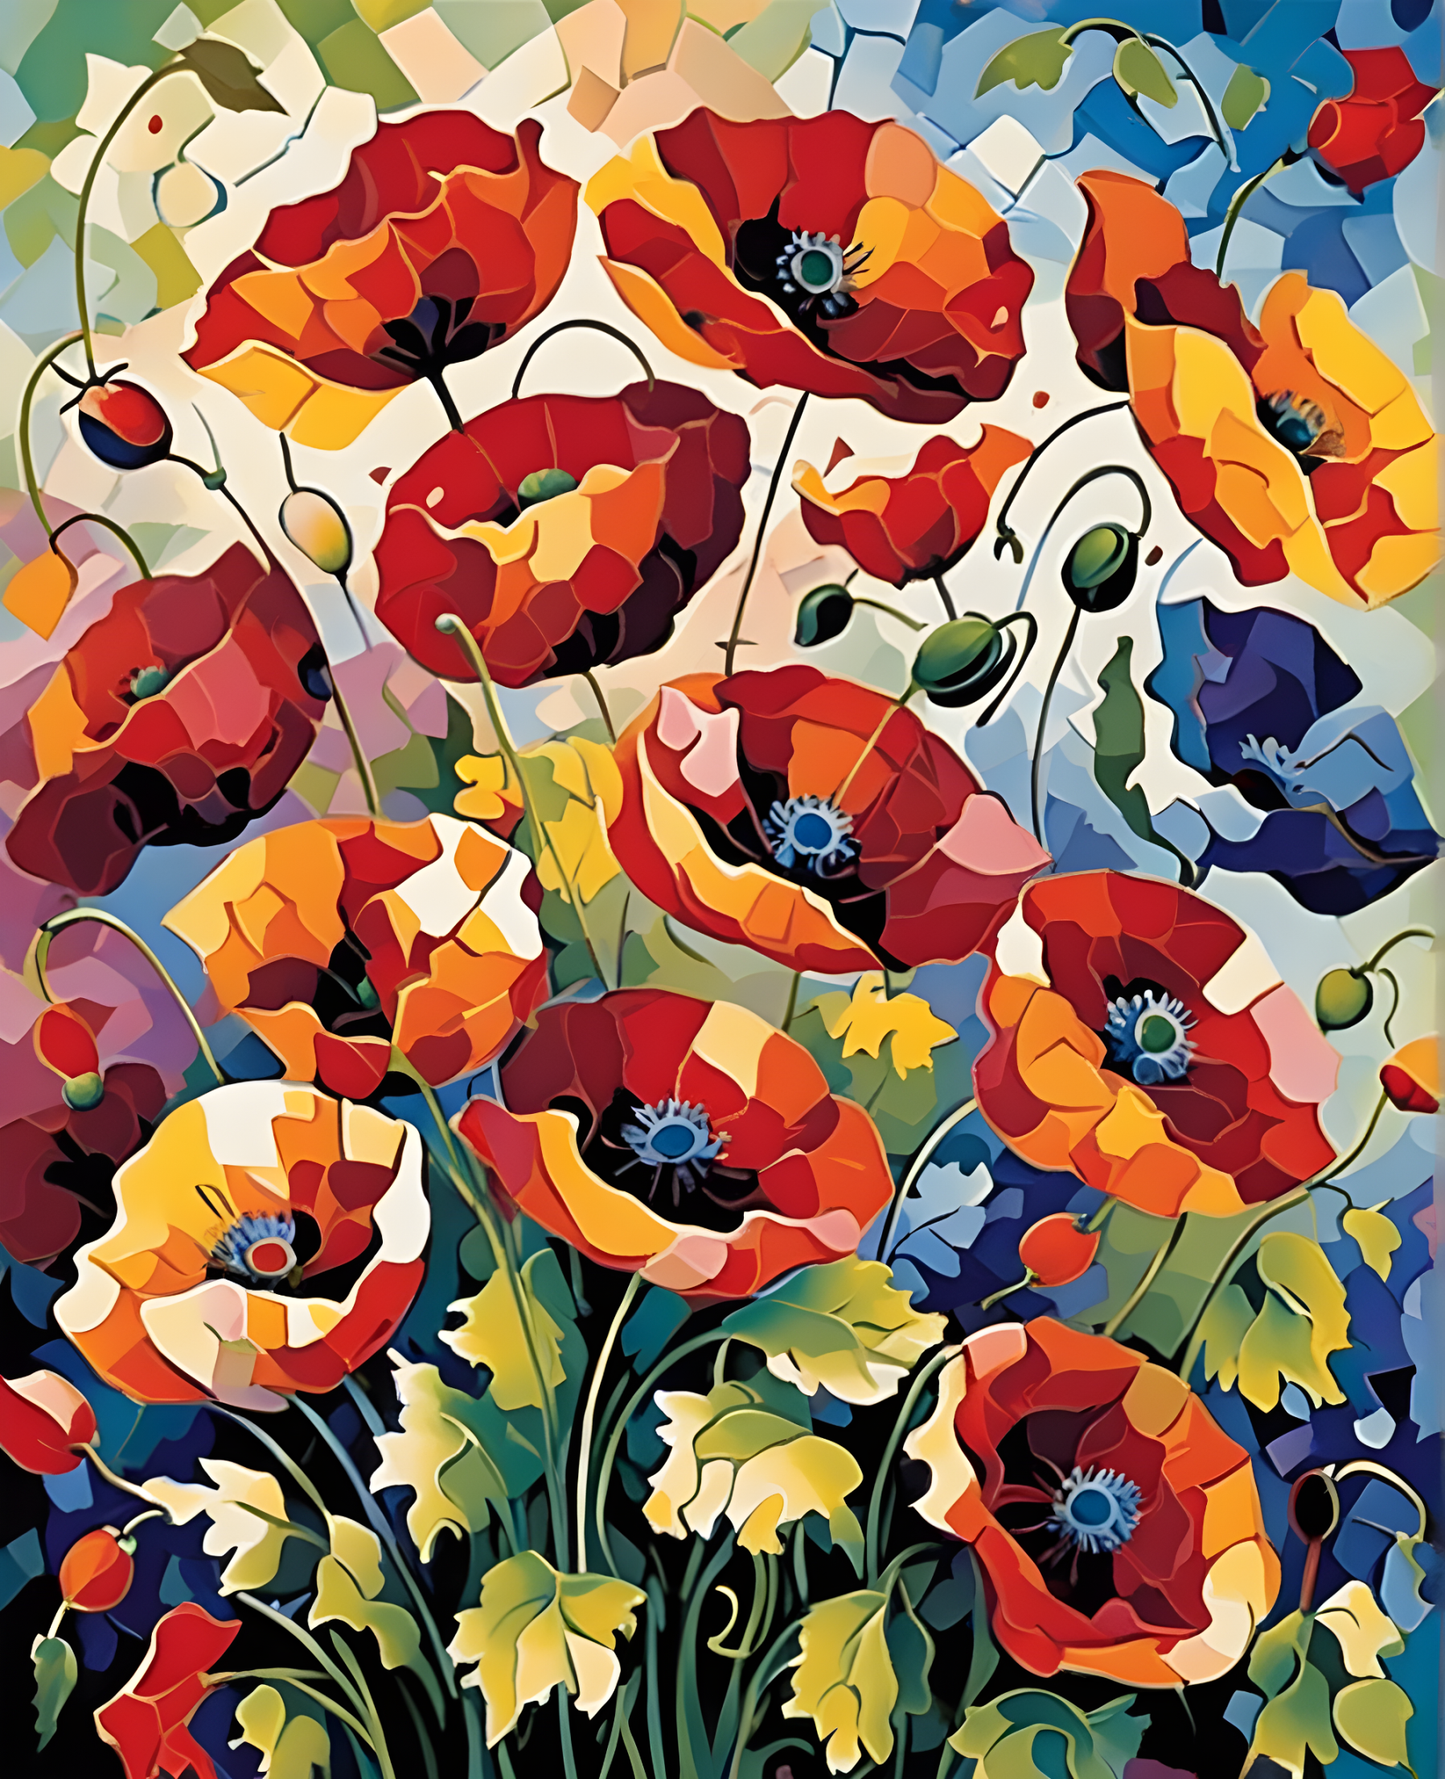 Poppies (9) - Van-Go Paint-By-Number Kit